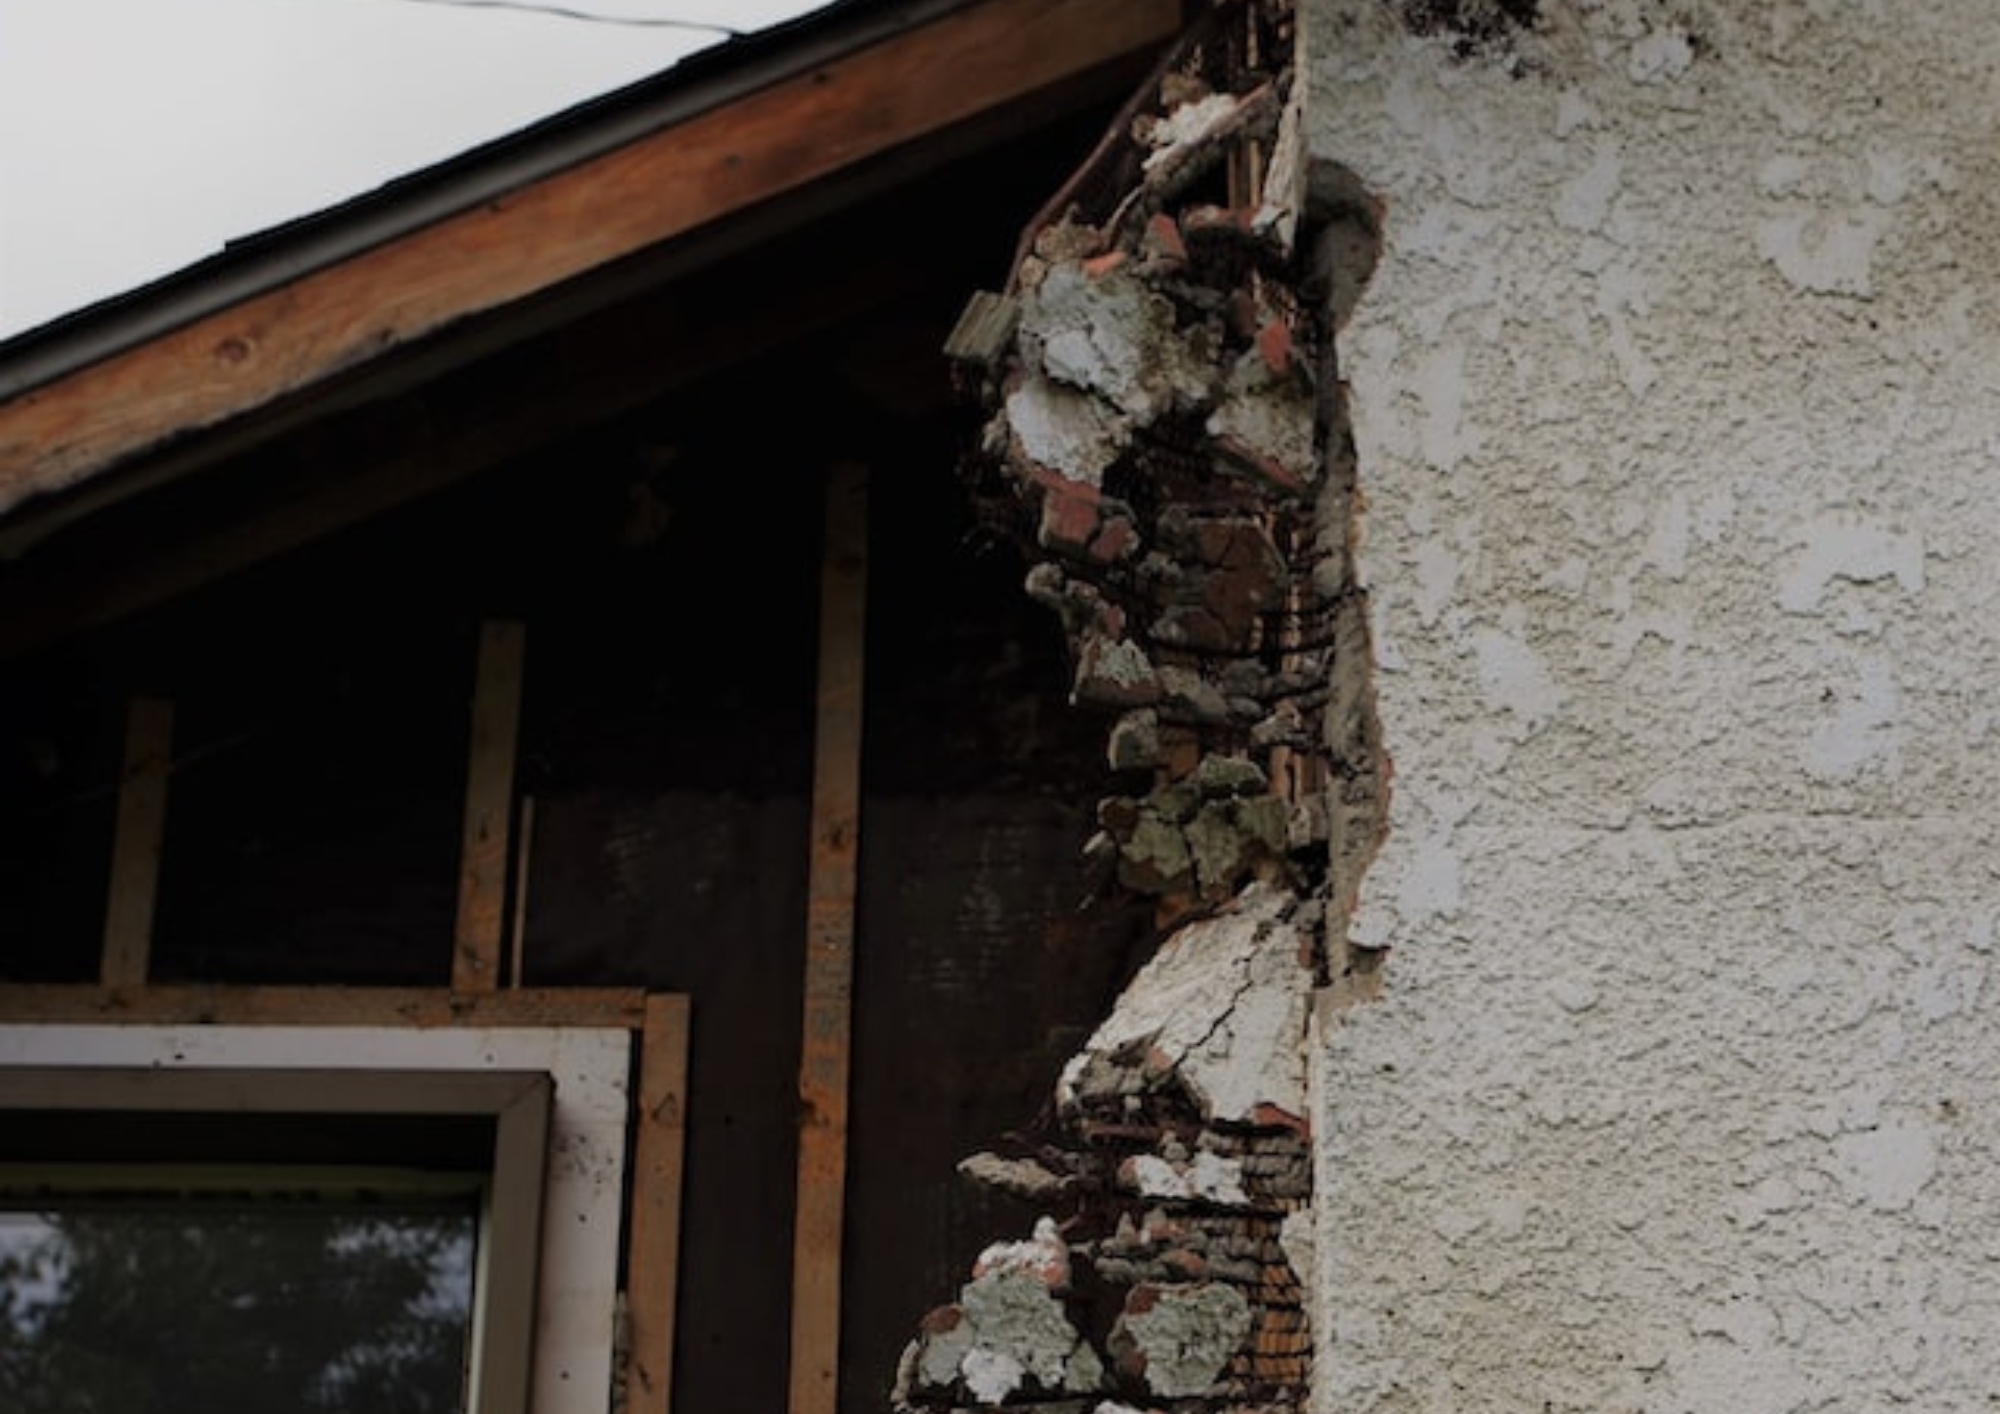 asbestos damage to a home